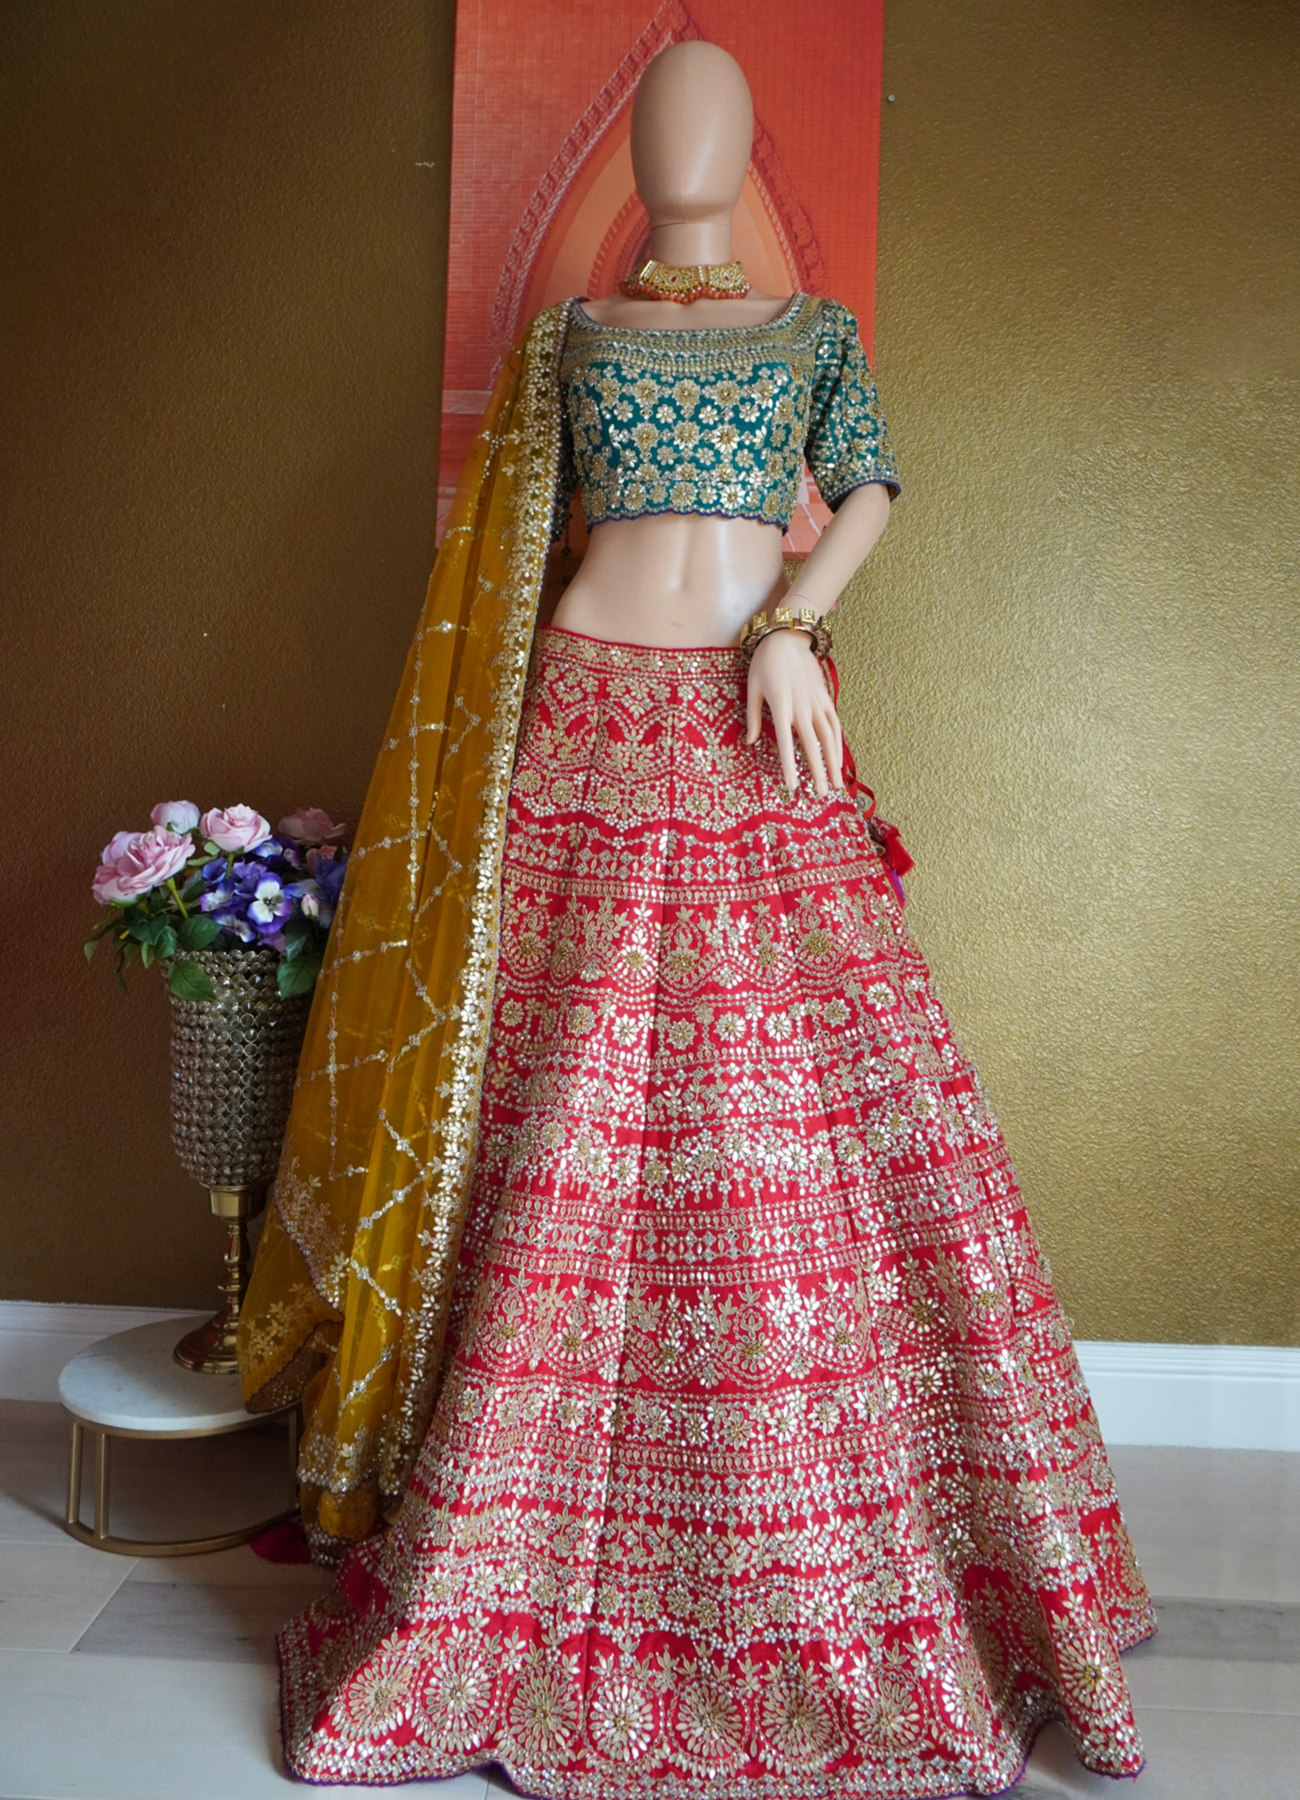 Gold bridal lehenga | Indian bride outfits, Indian wedding outfits, Bridal  dress fashion